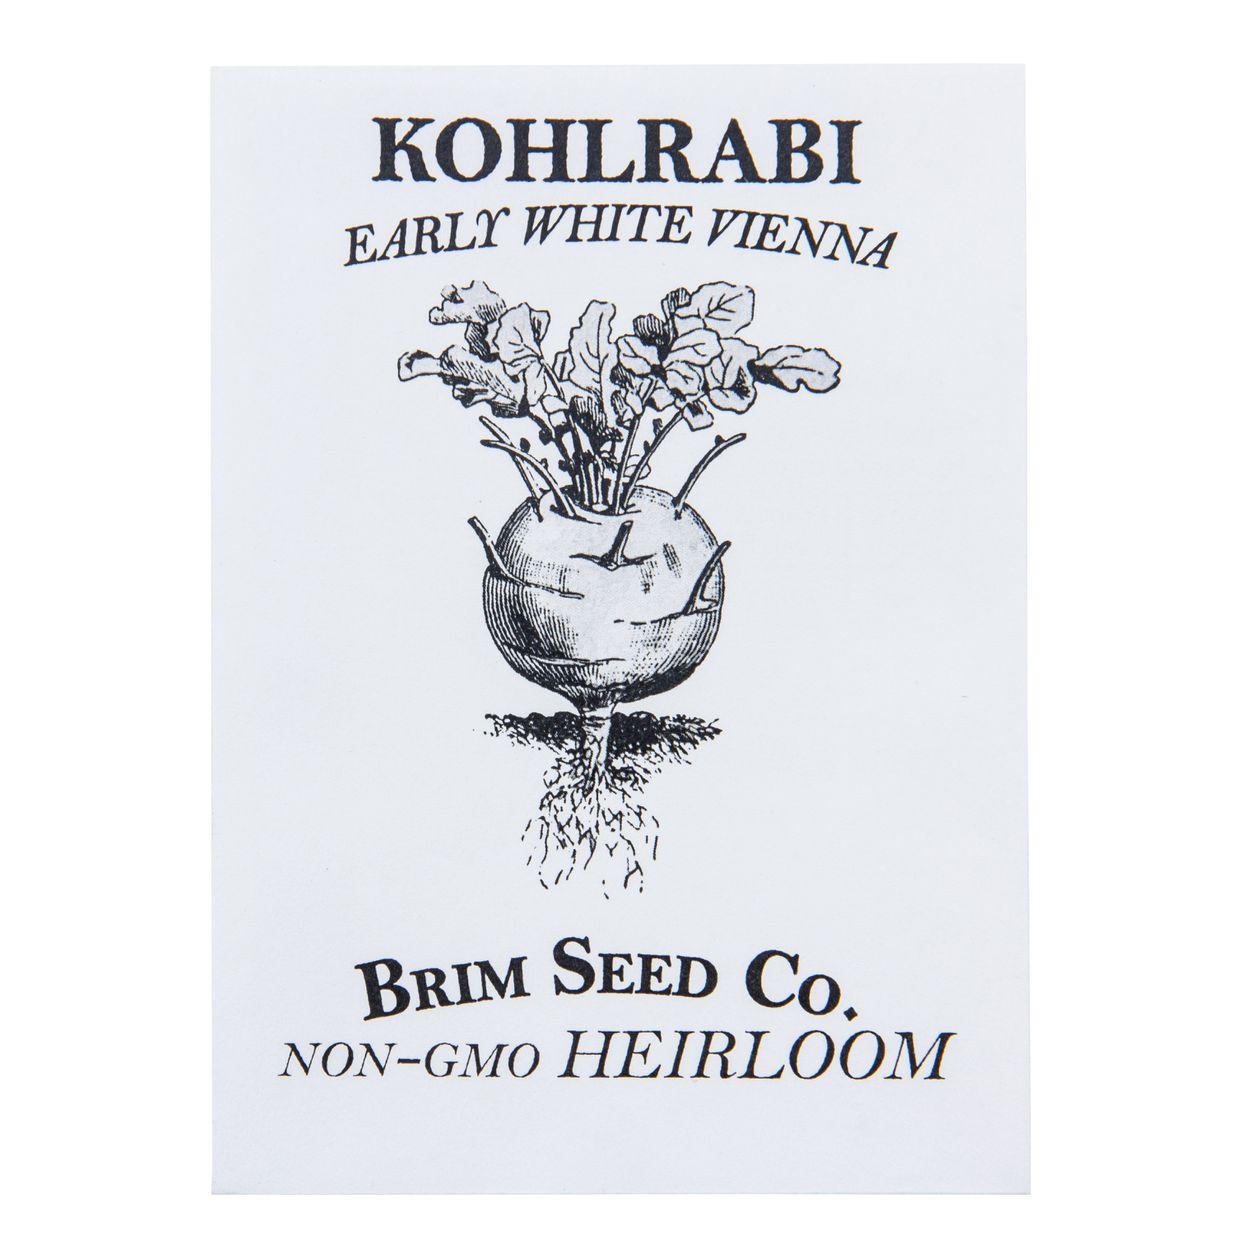 Brim Seed Co. - Early White Vienna Kohlrabi Heirloom Seed